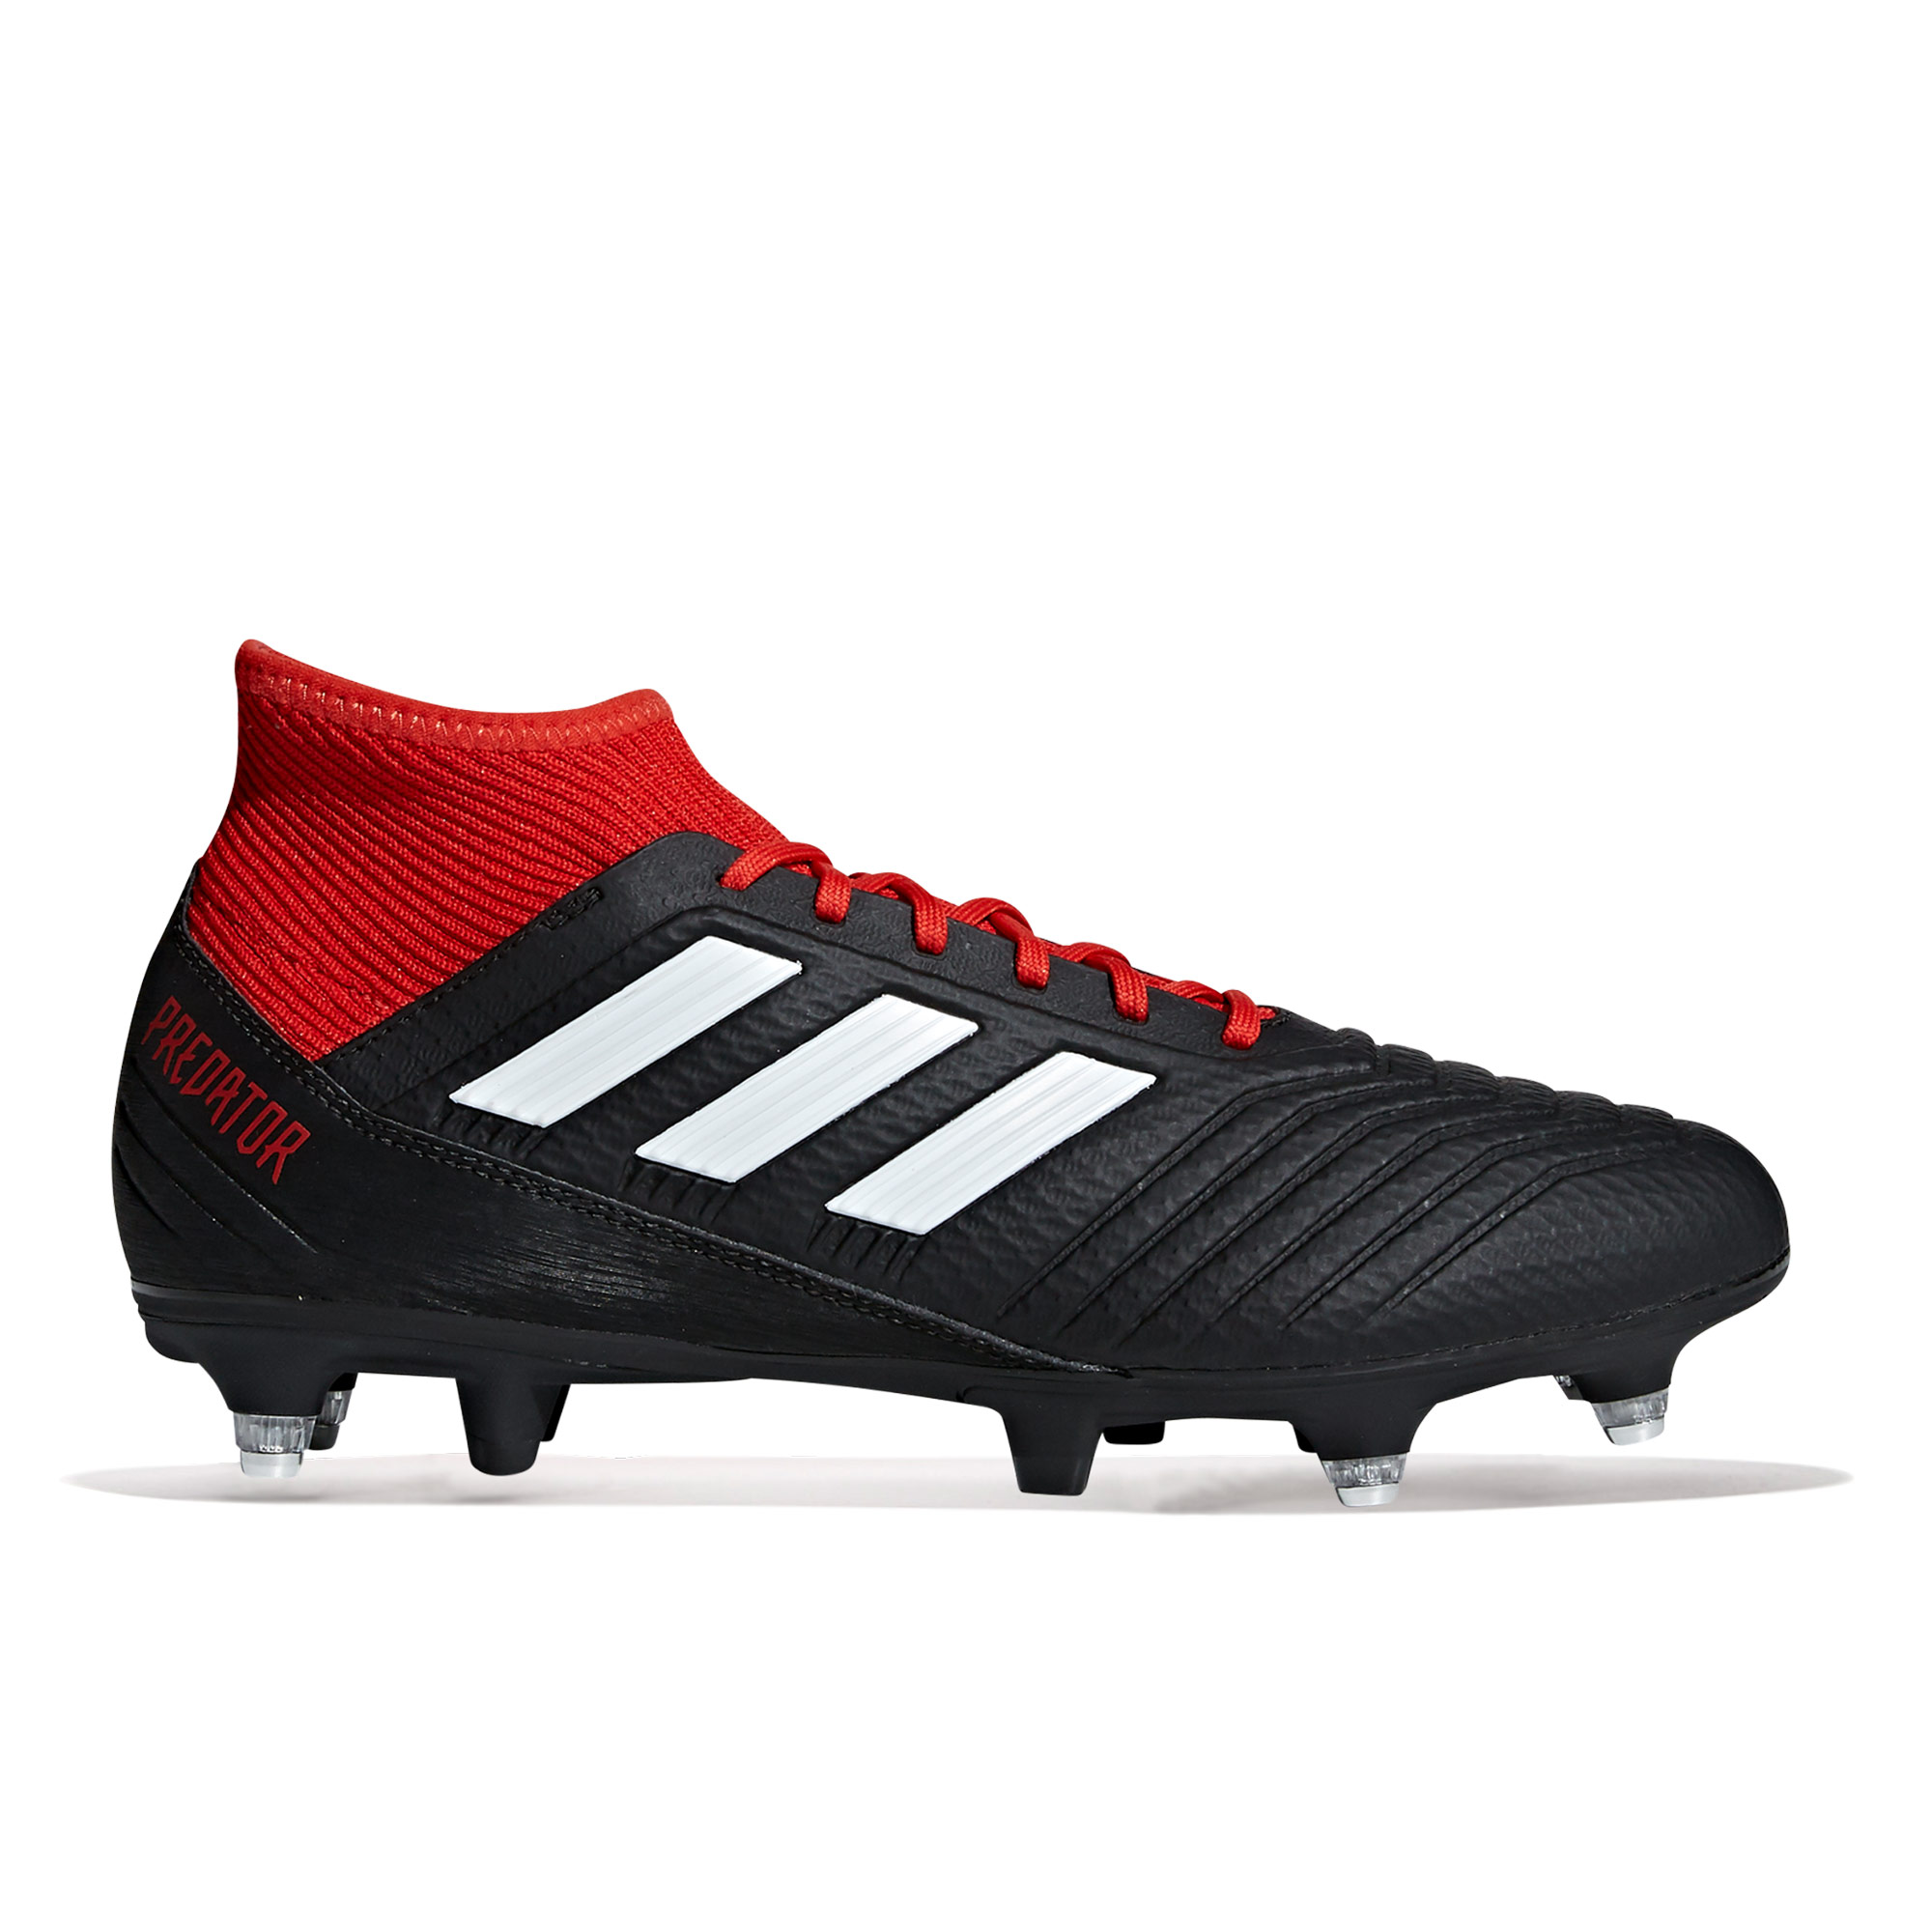 Adidas adidas Predator 18.3 Soft Ground Football Boots - Black